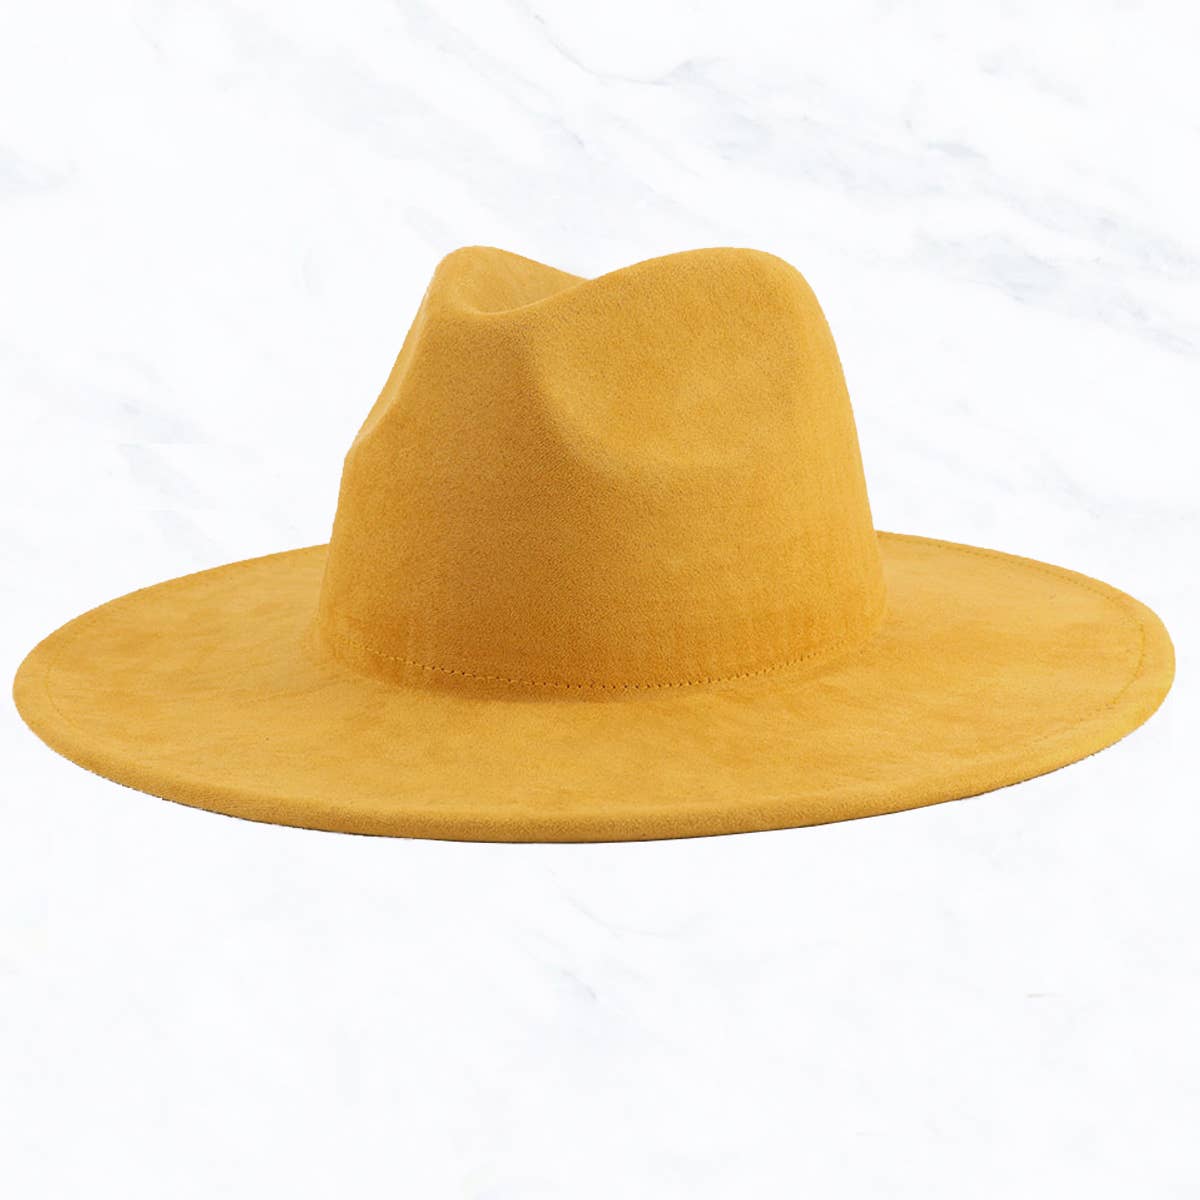 Suede Large Eaves Peach Top Fedora Hat: Beige